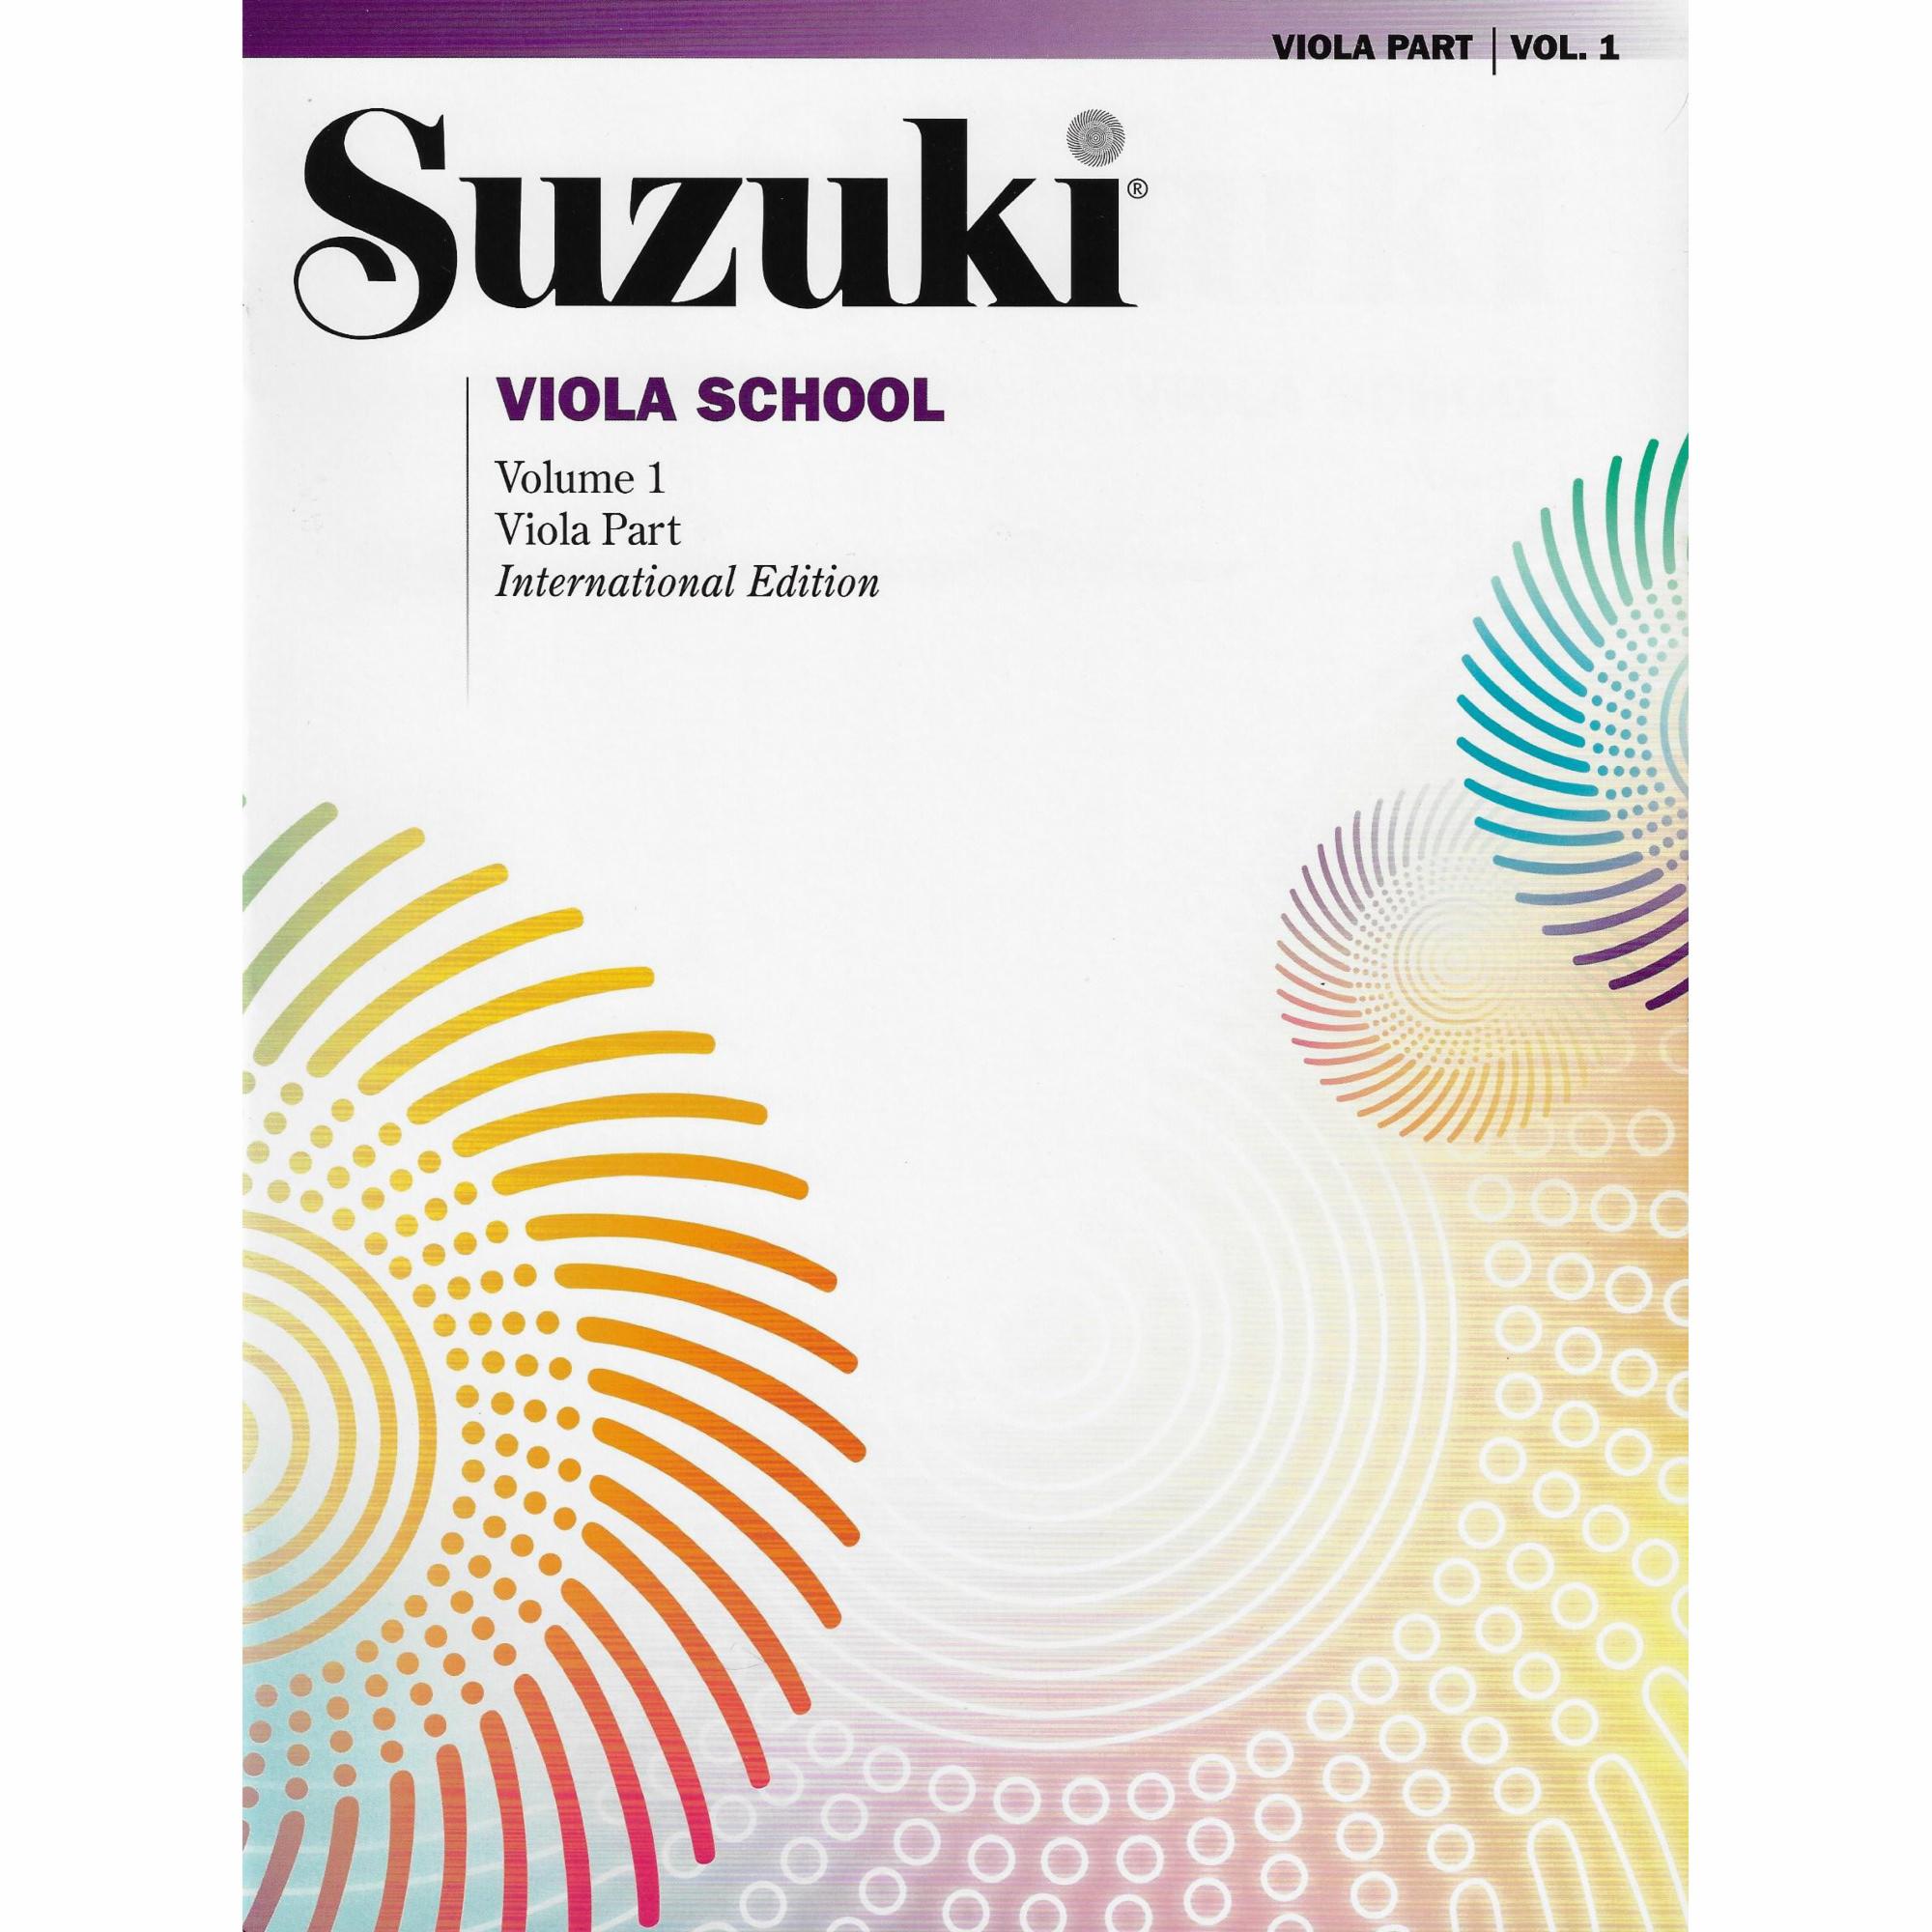 Suzuki Viola School: Viola Parts